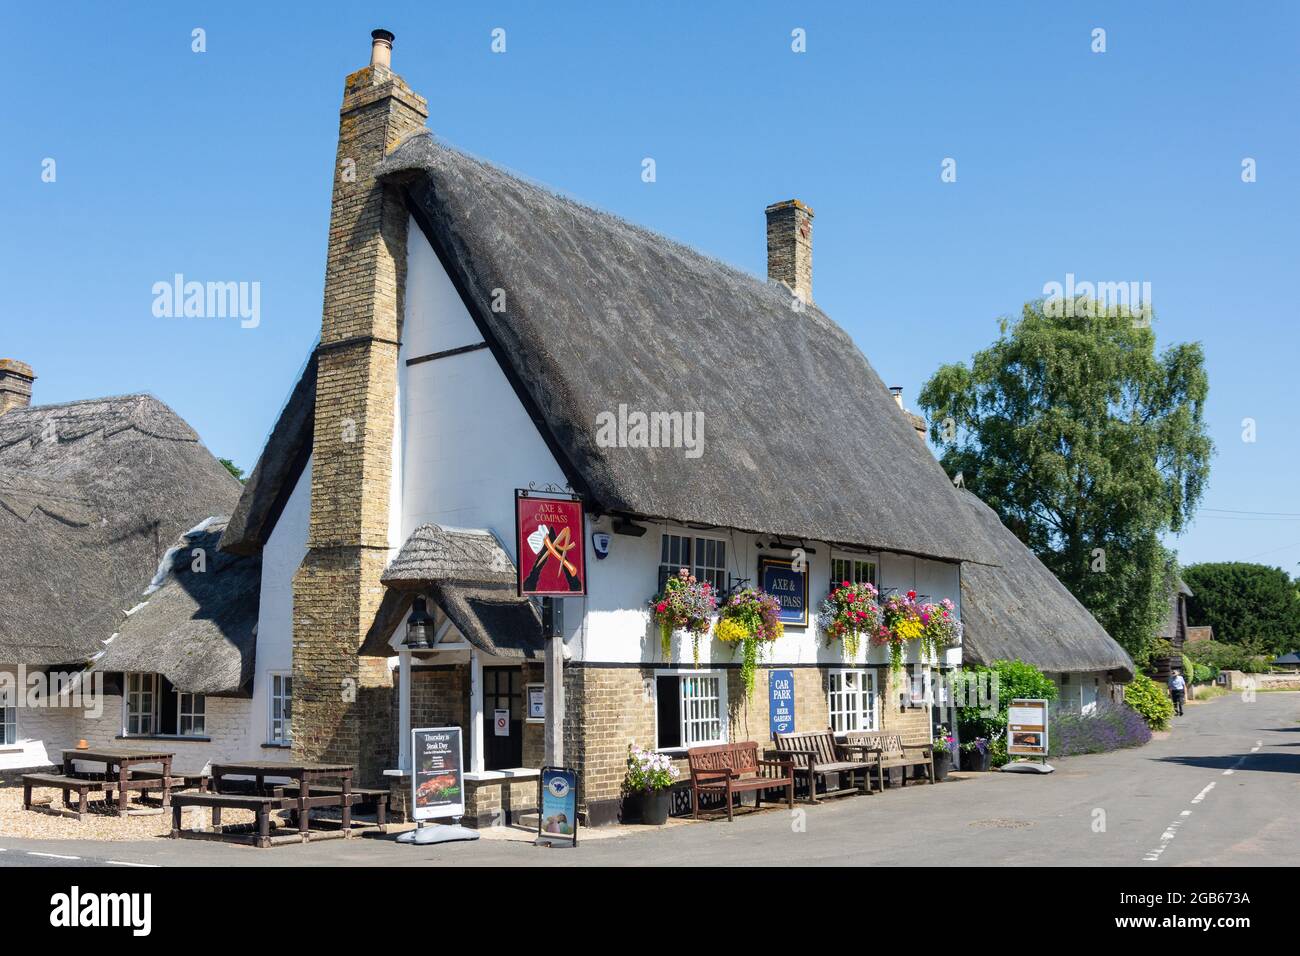 Thatched Axe & Compass Pub, High Street, Hemingford Abbots, Cambridgeshire, England, United Kingdom Stock Photo